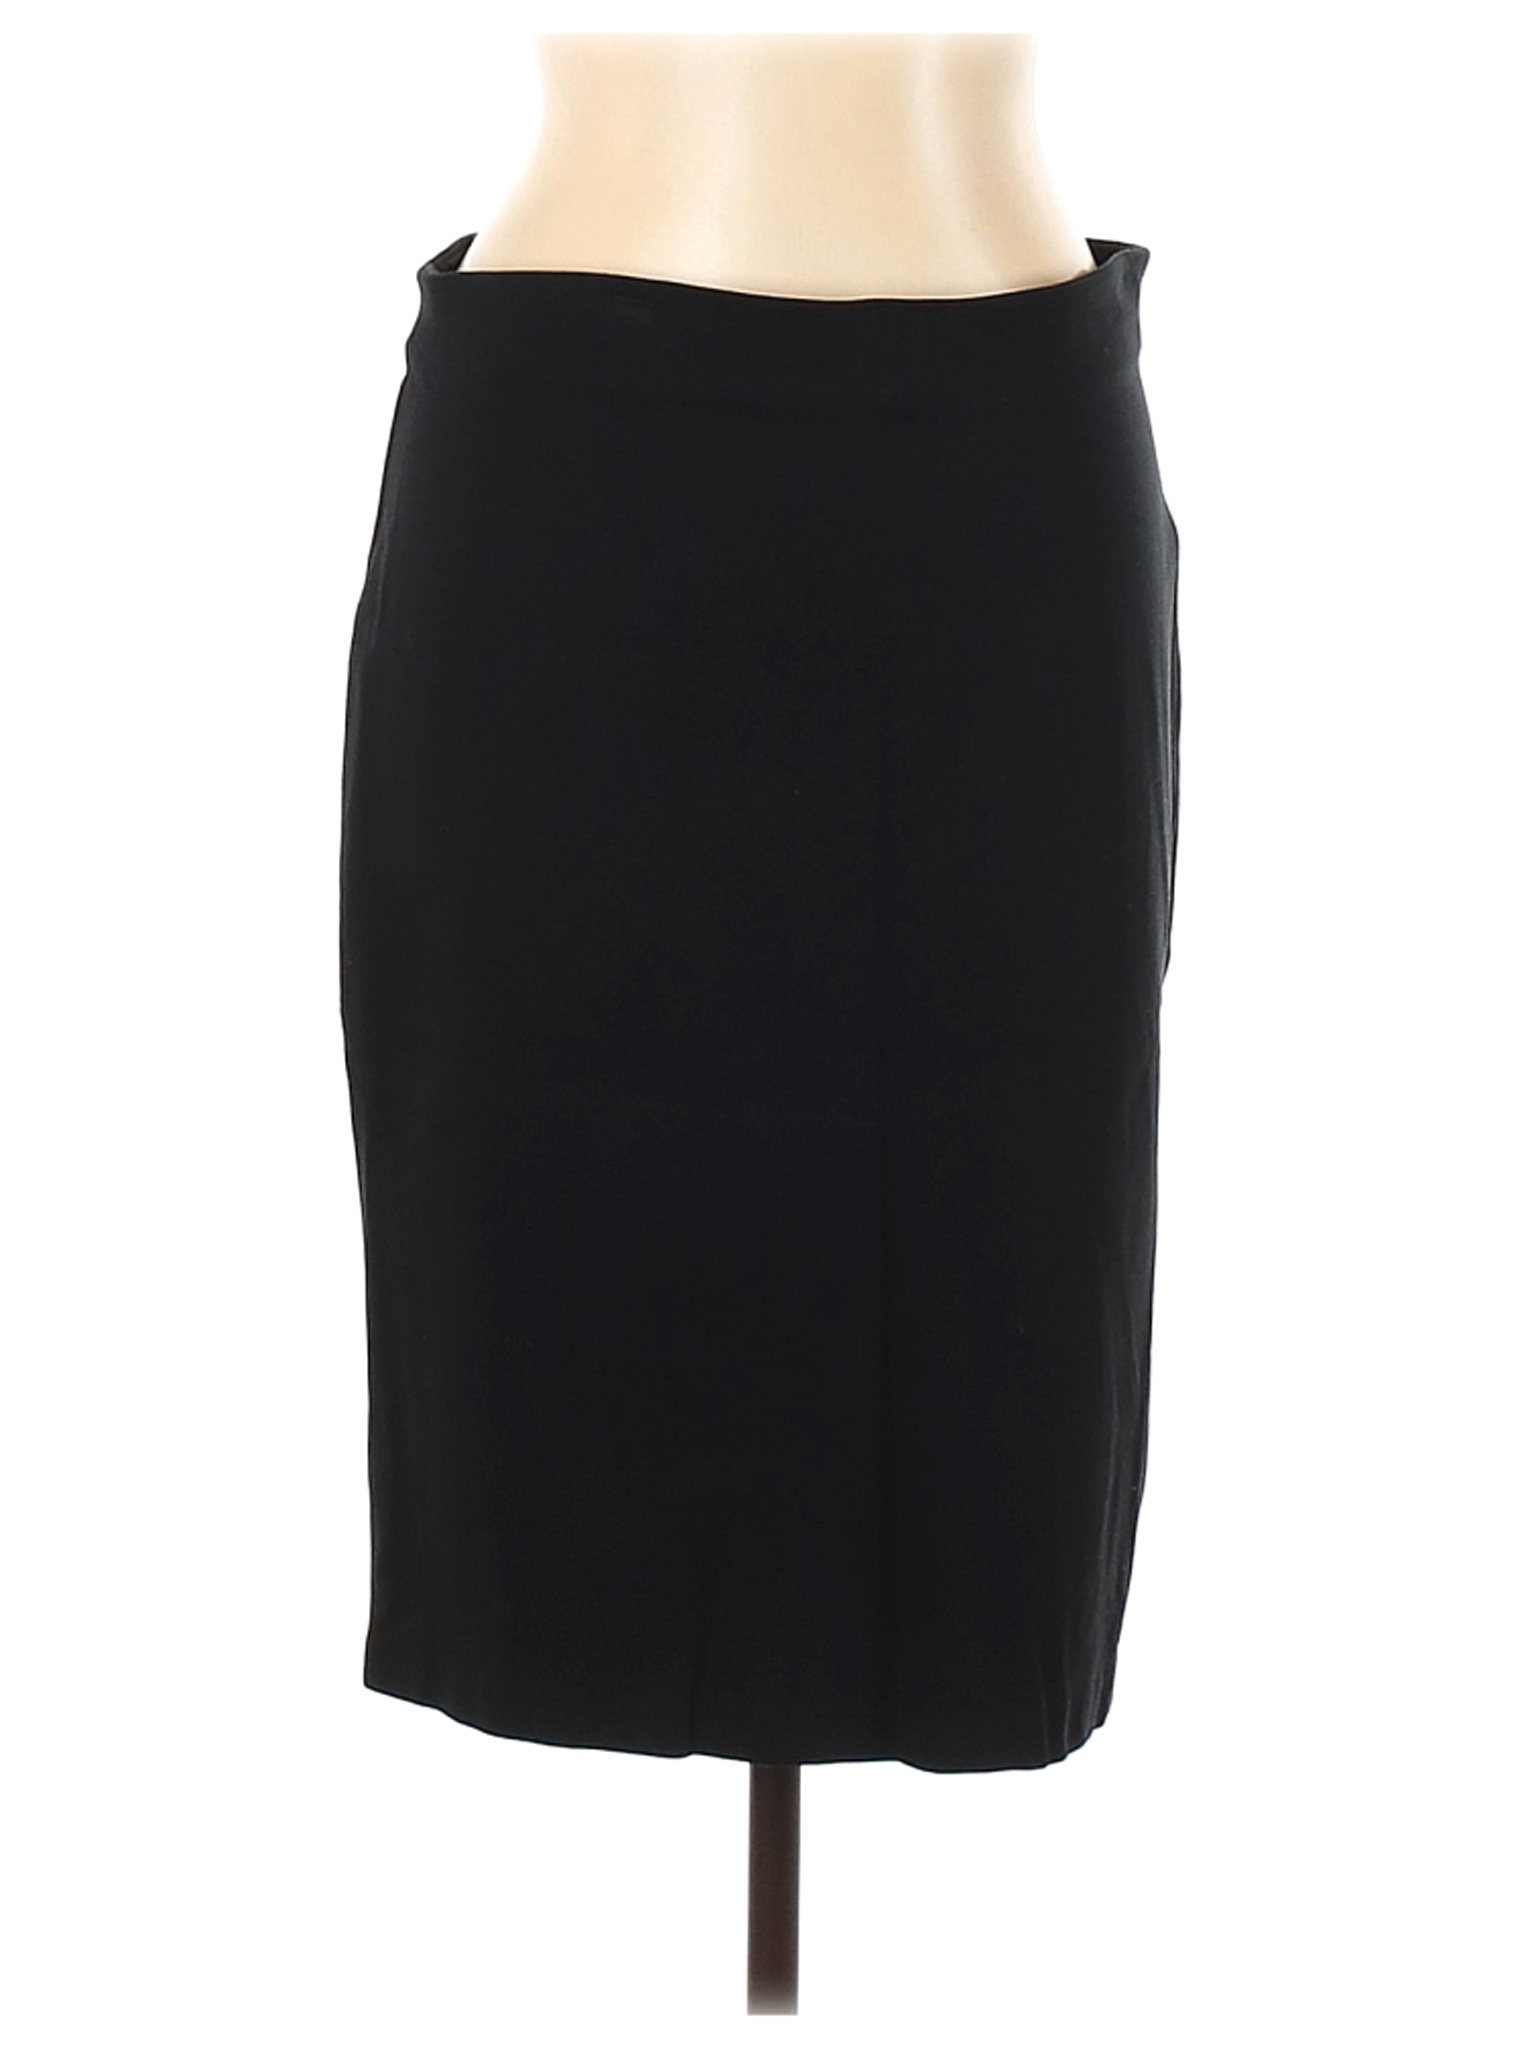 Philosophy Republic Clothing Women Black Casual Skirt 12 | eBay